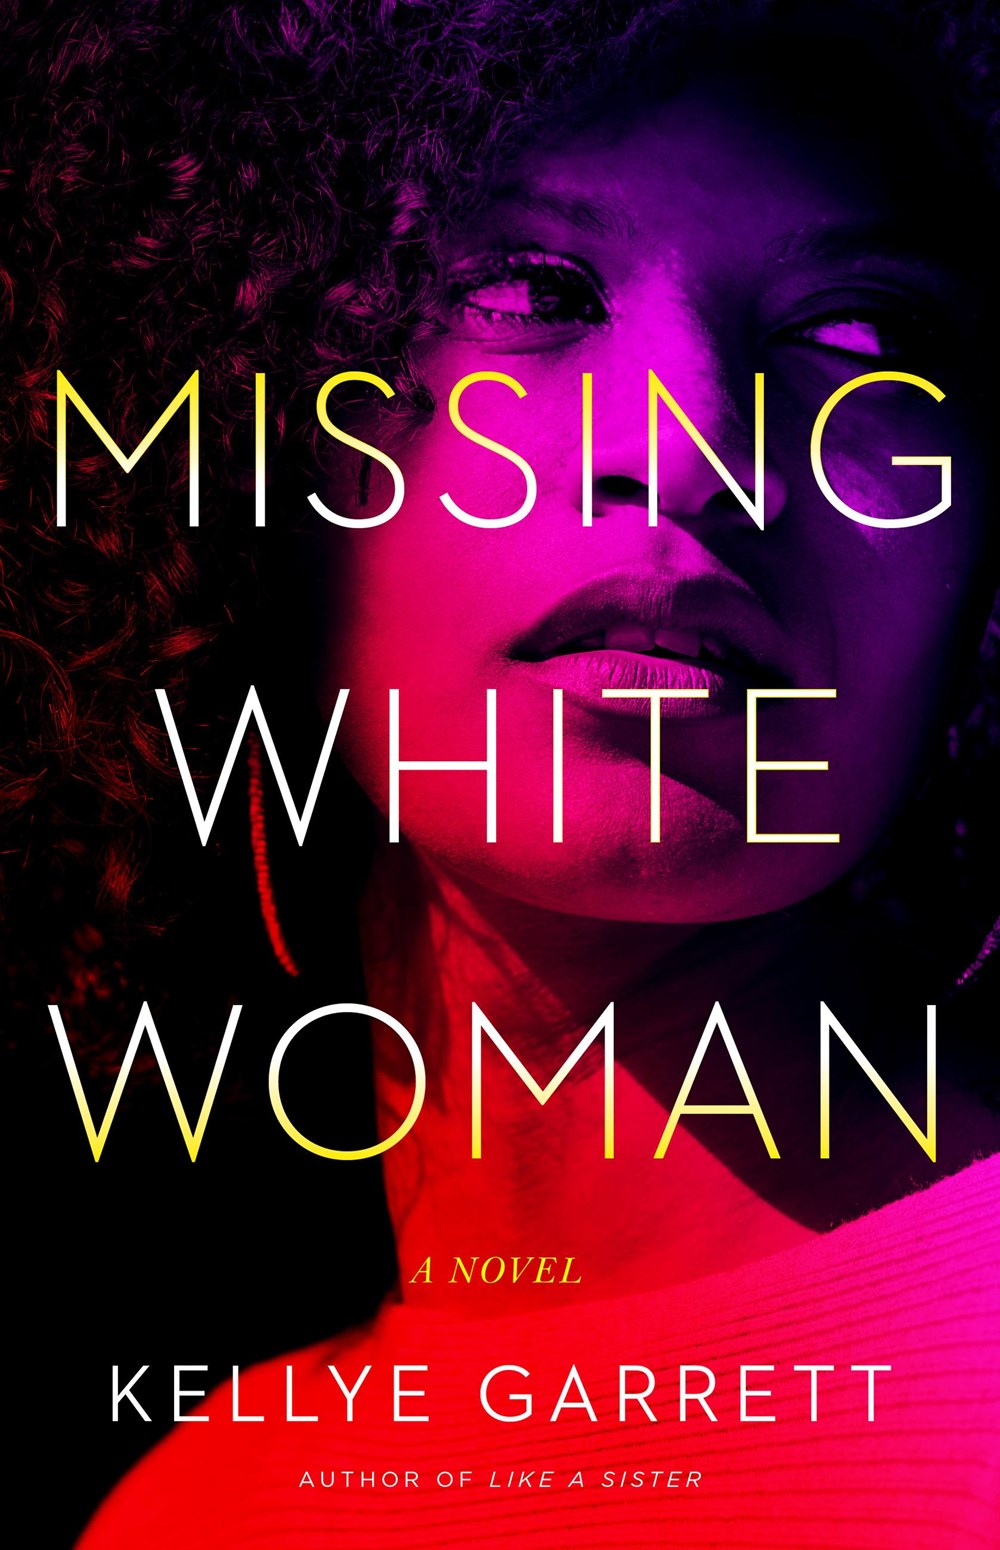 Missing White Woman by Kellye Garrett (Hardcover) (PREORDER)